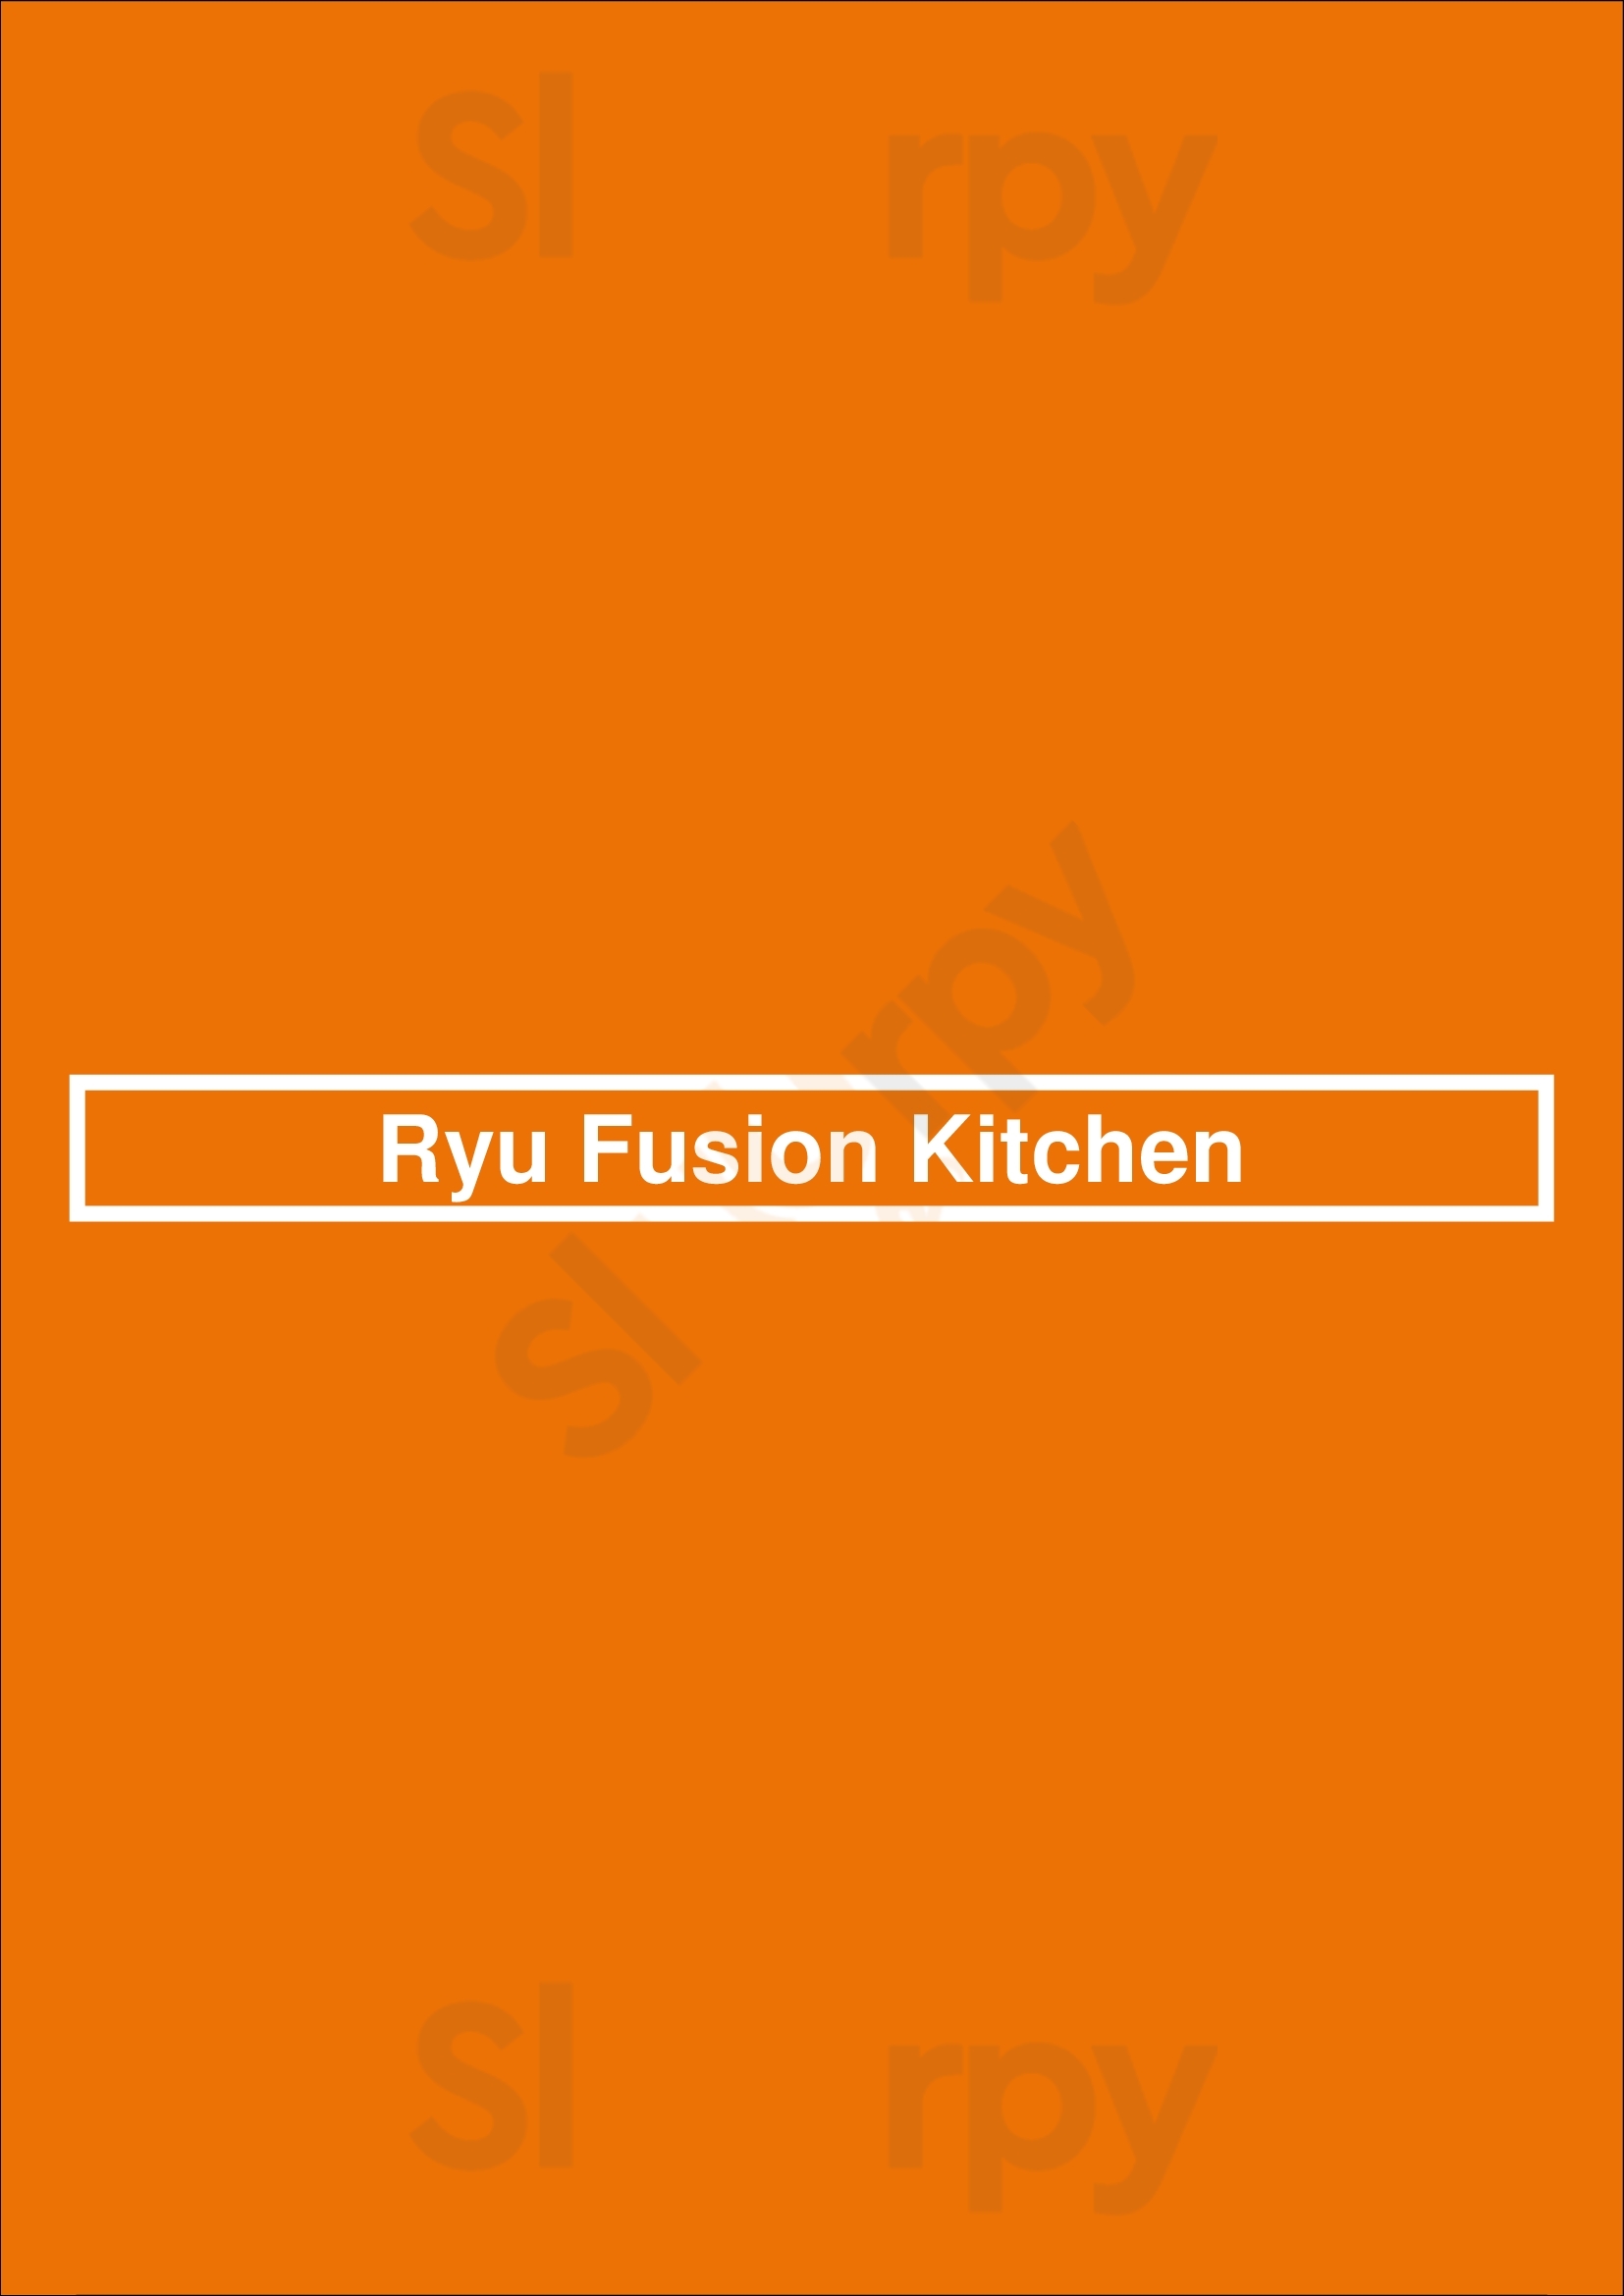 Ryu Fusion Kitchen München Menu - 1